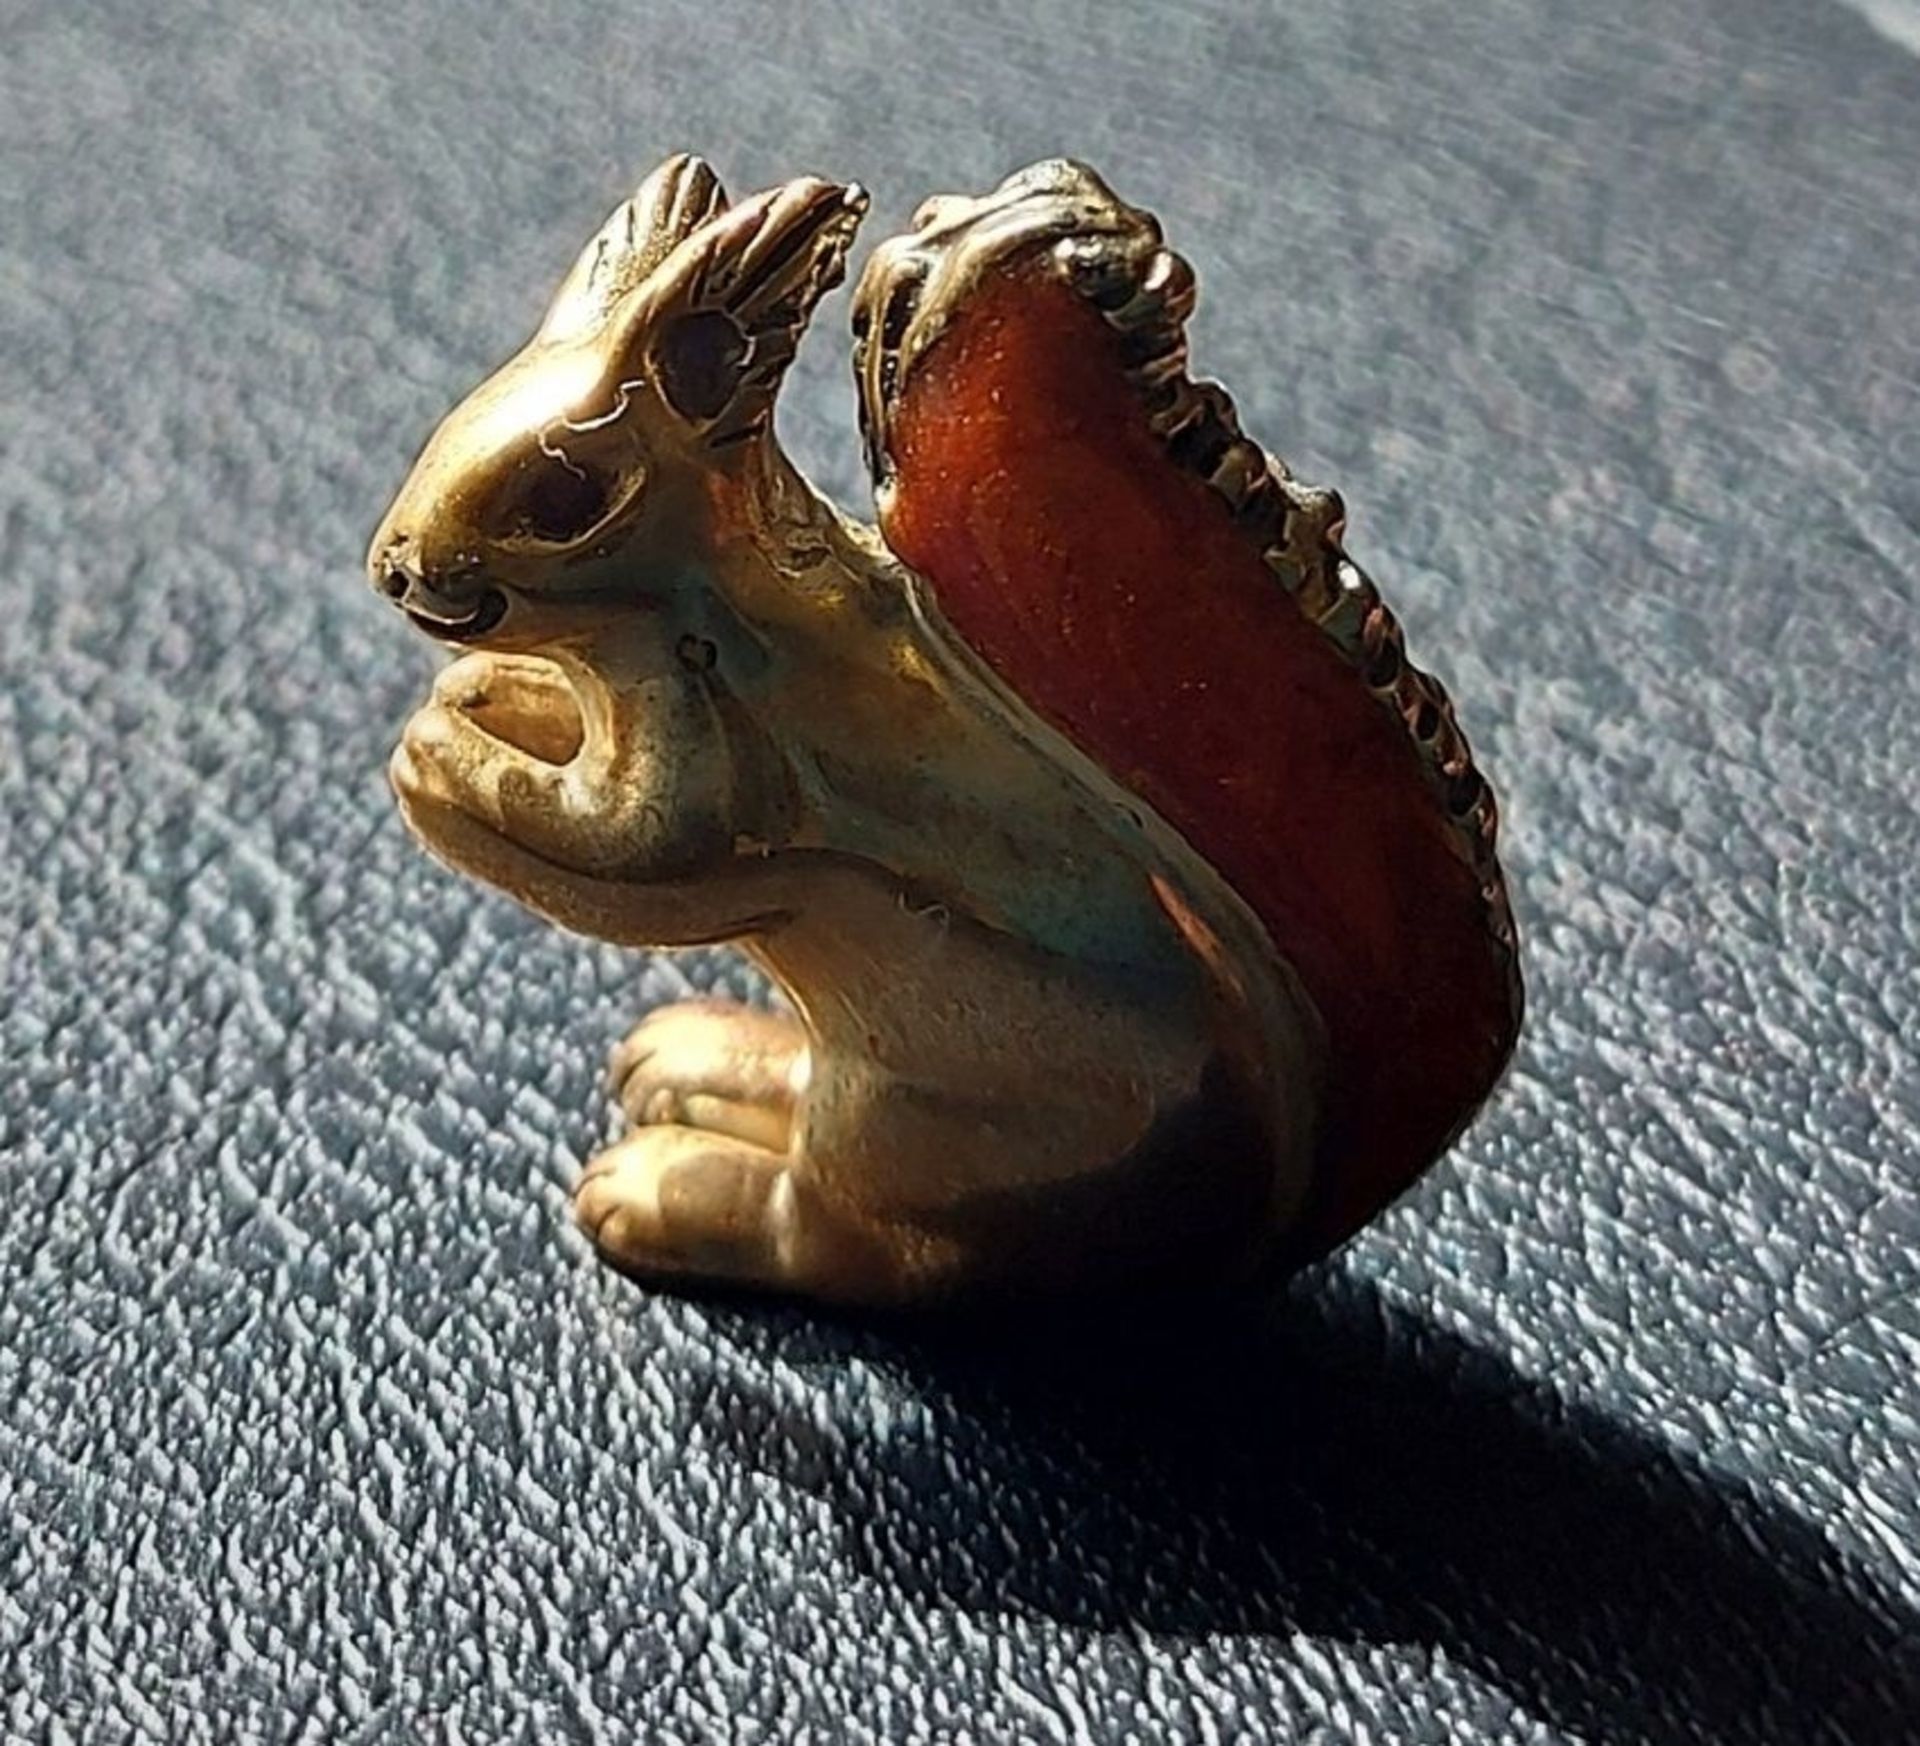 Zauberhaftes Eichhörnchen Silber vergoldet - Image 2 of 2